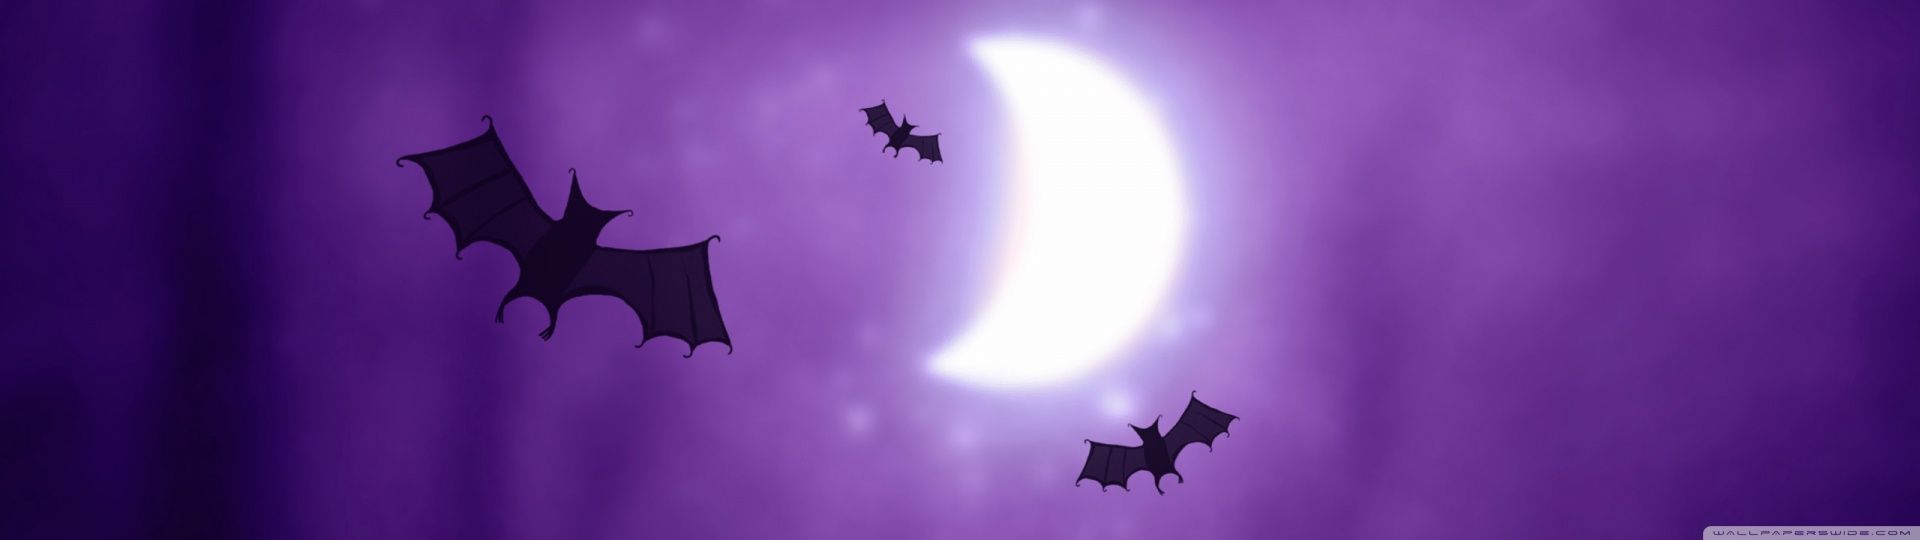 Bats Halloween HD desktop wallpaper : Mobile : Dual Monitor